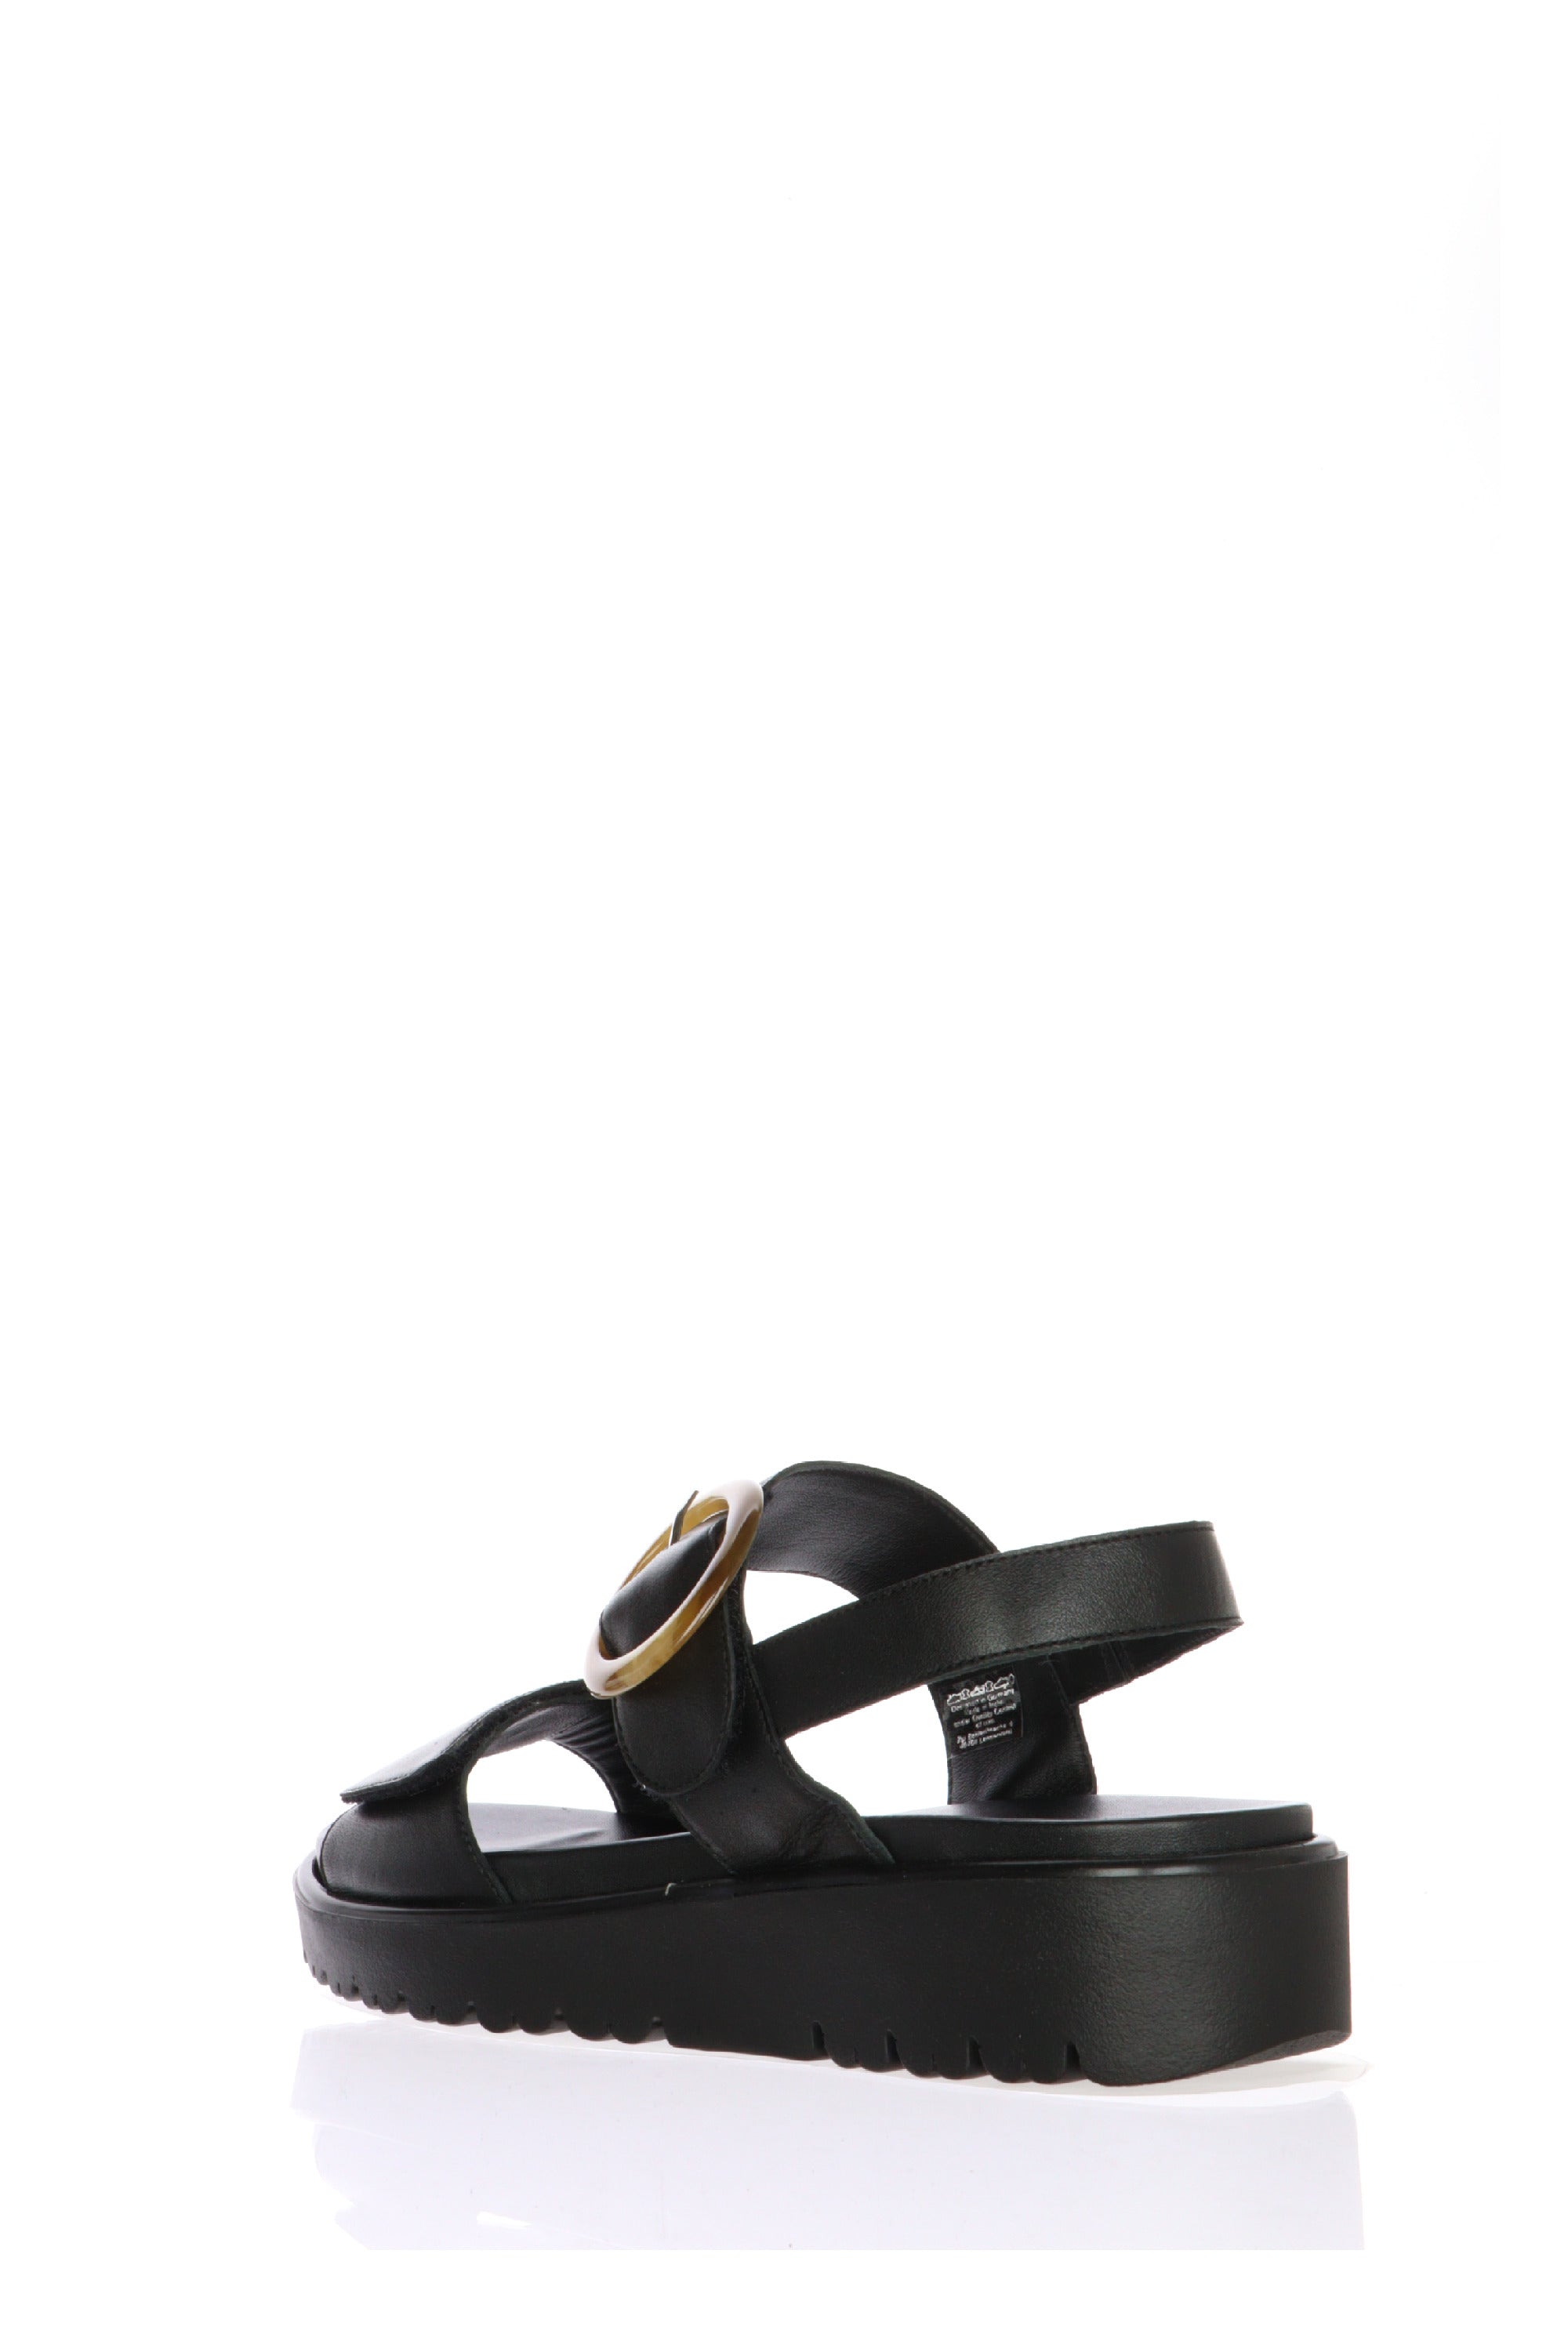 Sandalo due fasce in pelle nera numeri grandi donna Ara shoes